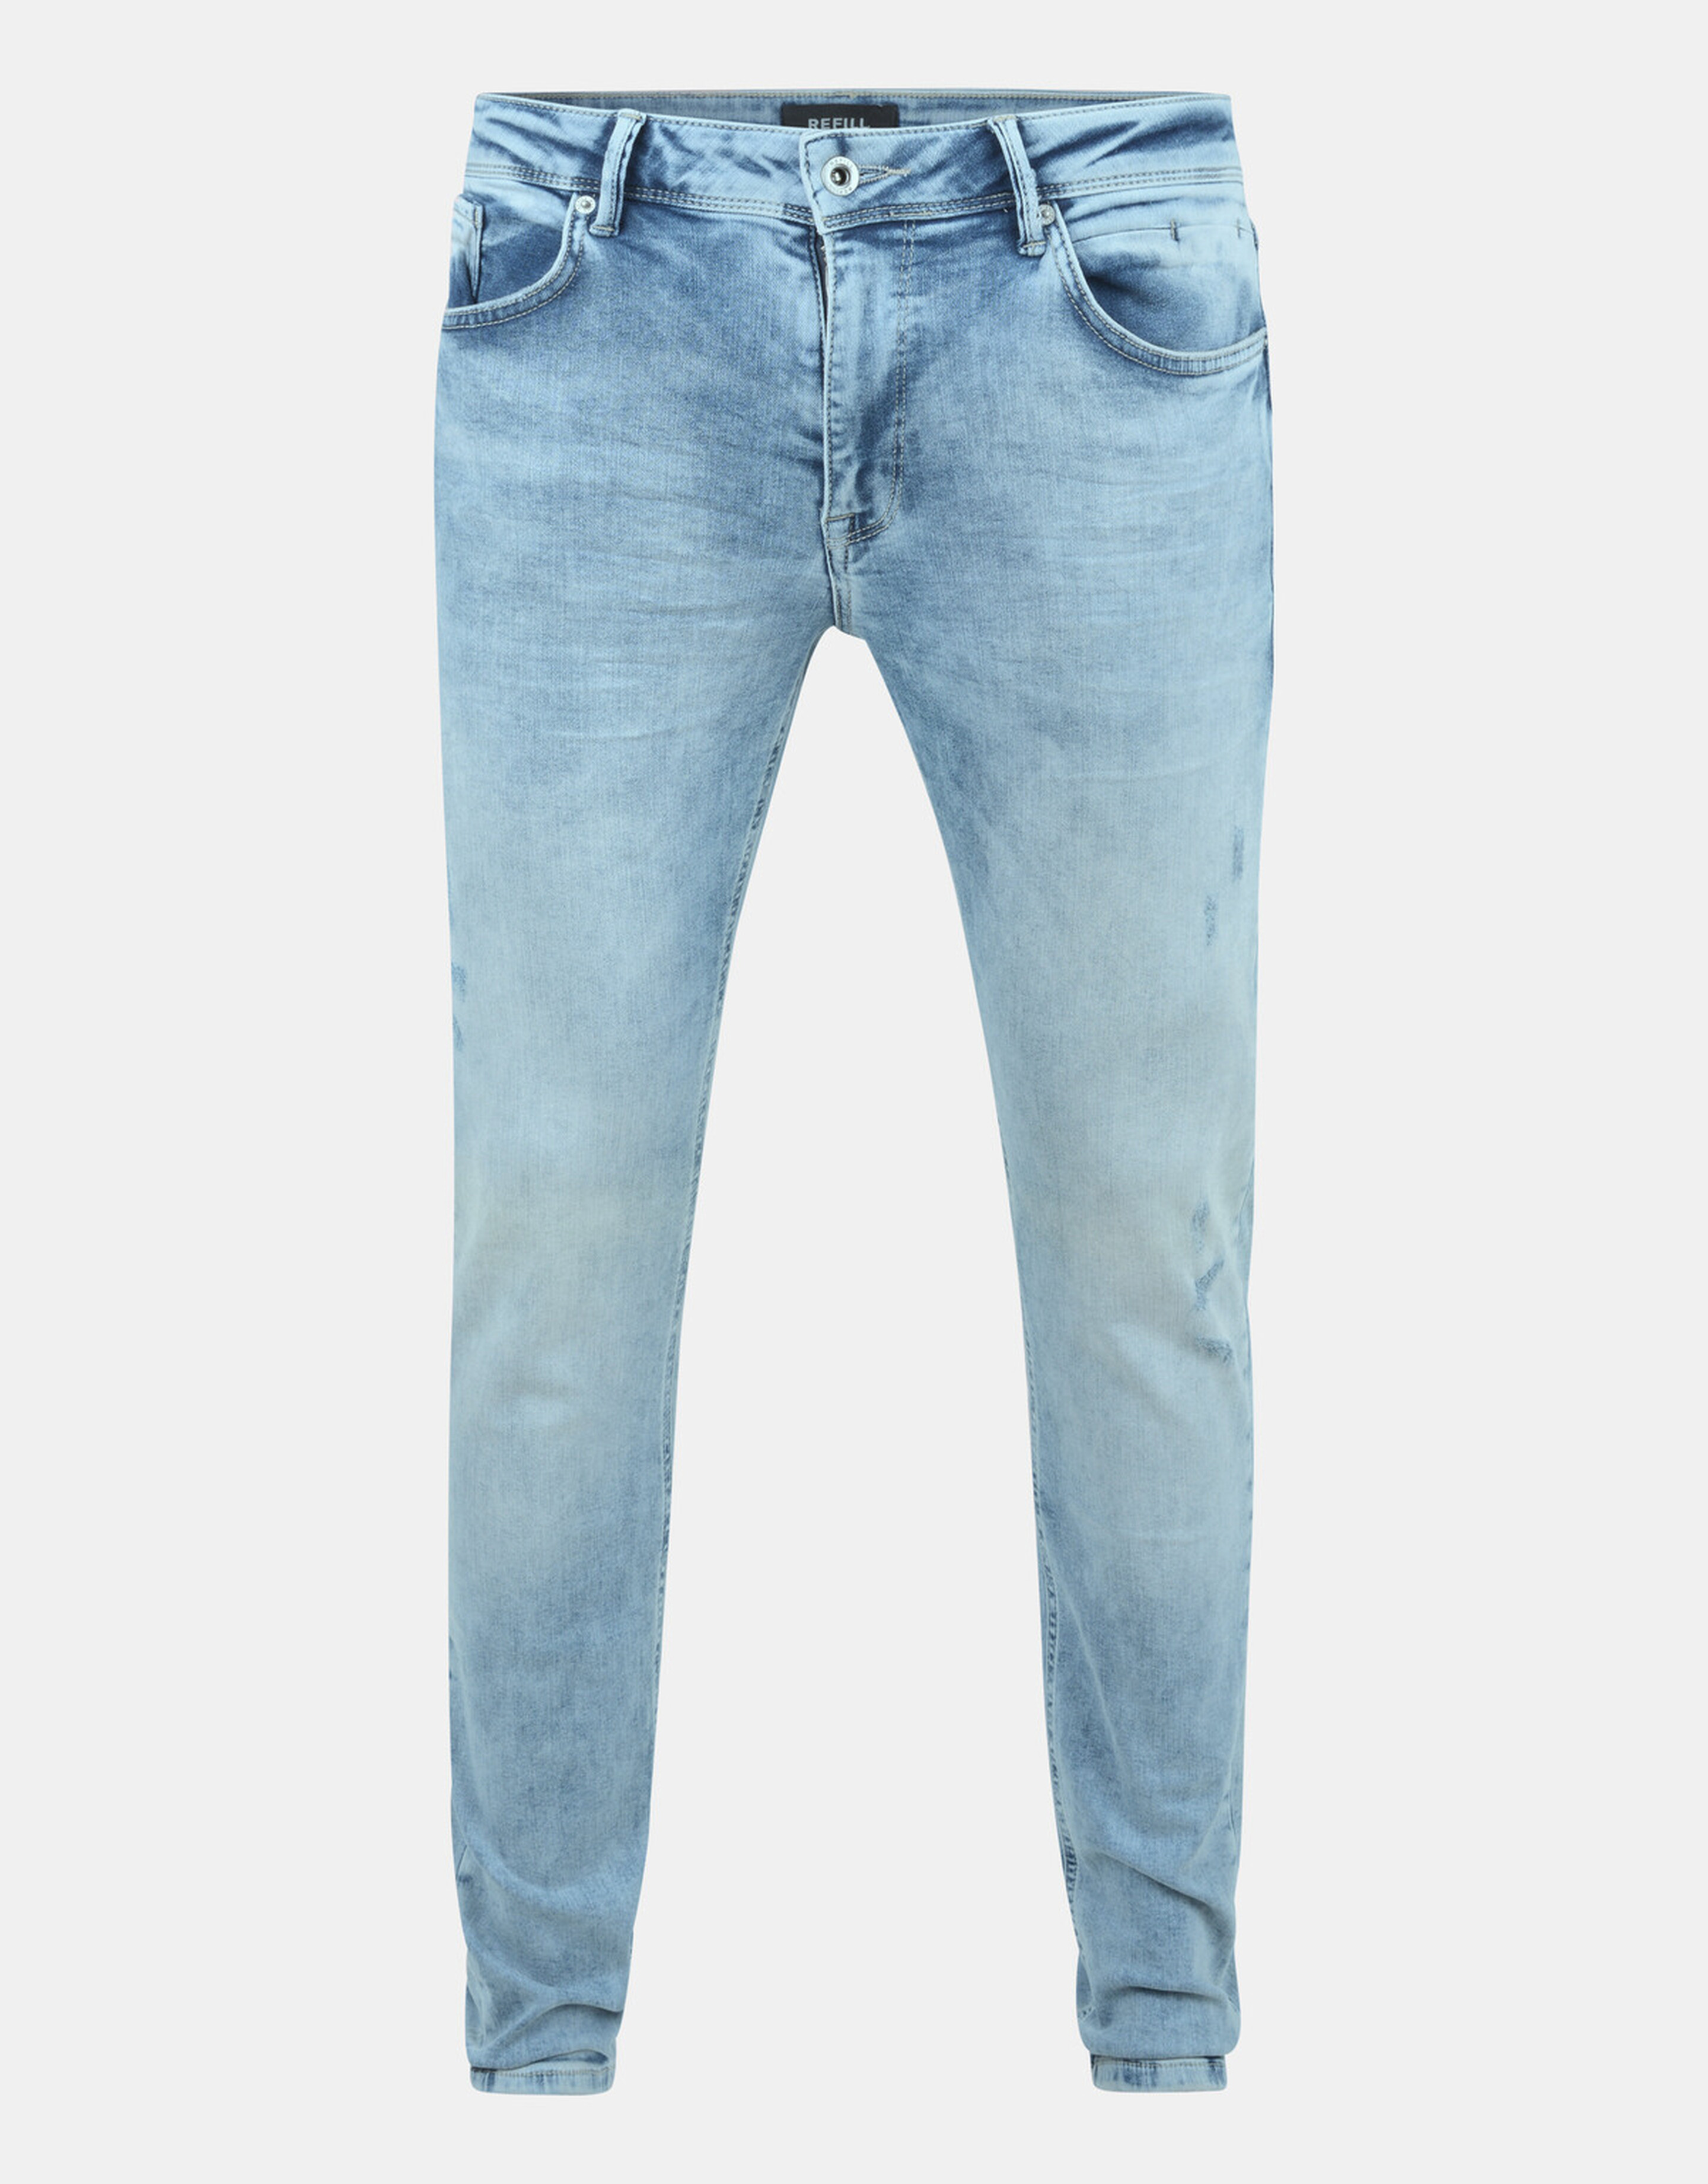 Lucas Slim Ametist Jeans L32 Refill